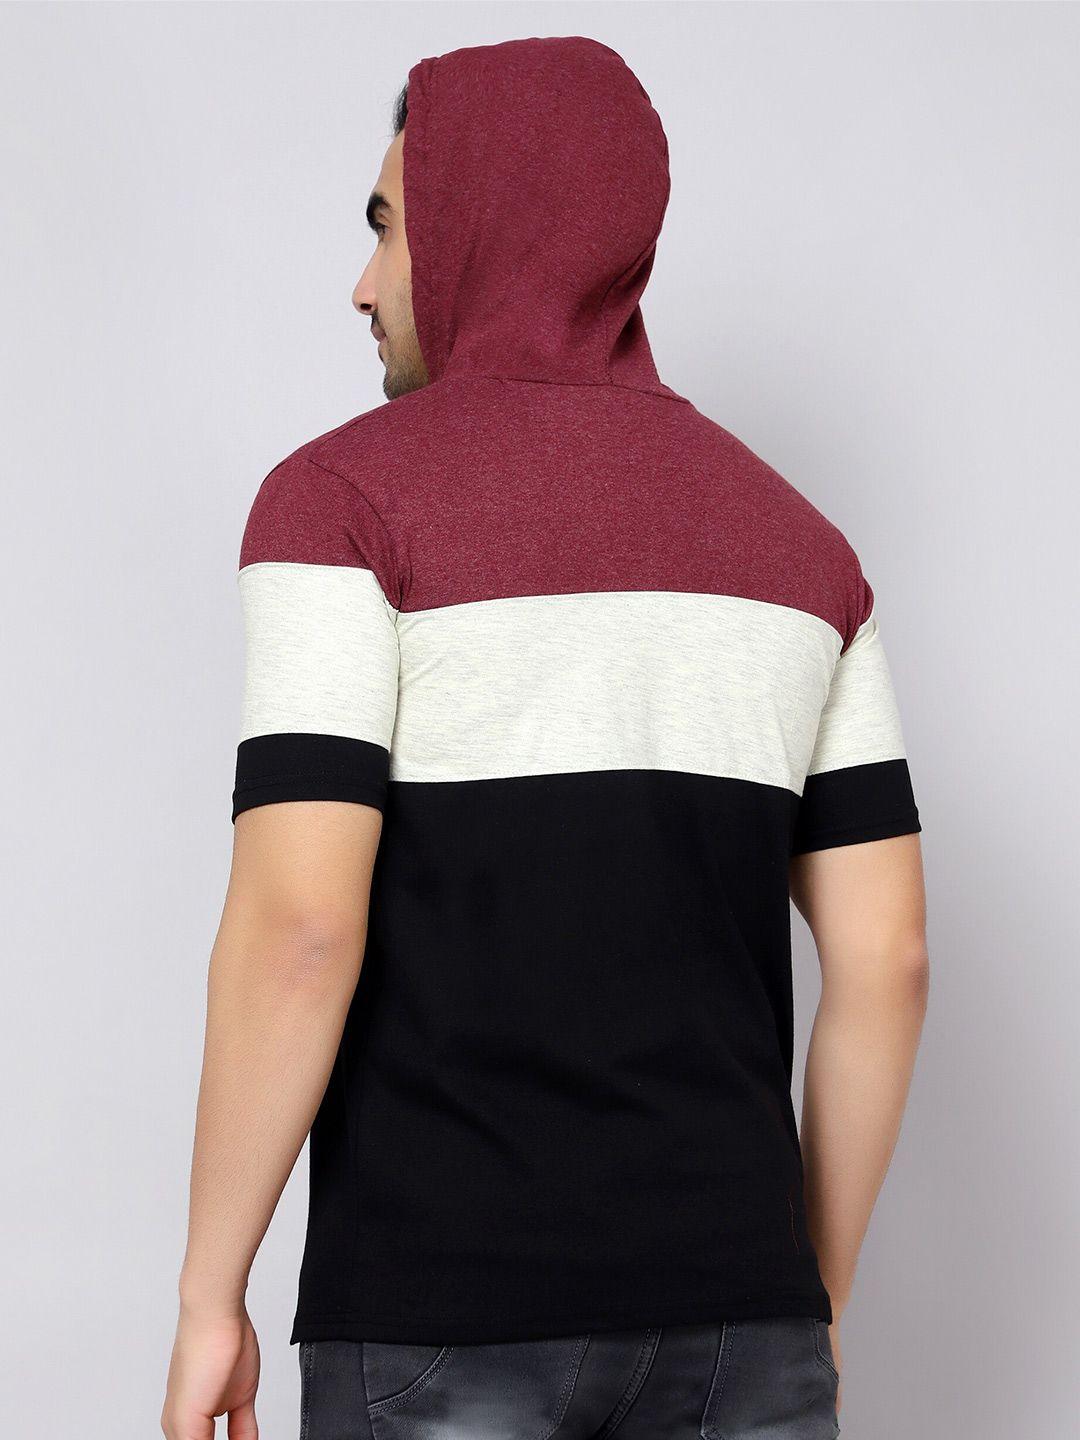 diaz hooded colourblocked cotton t-shirt